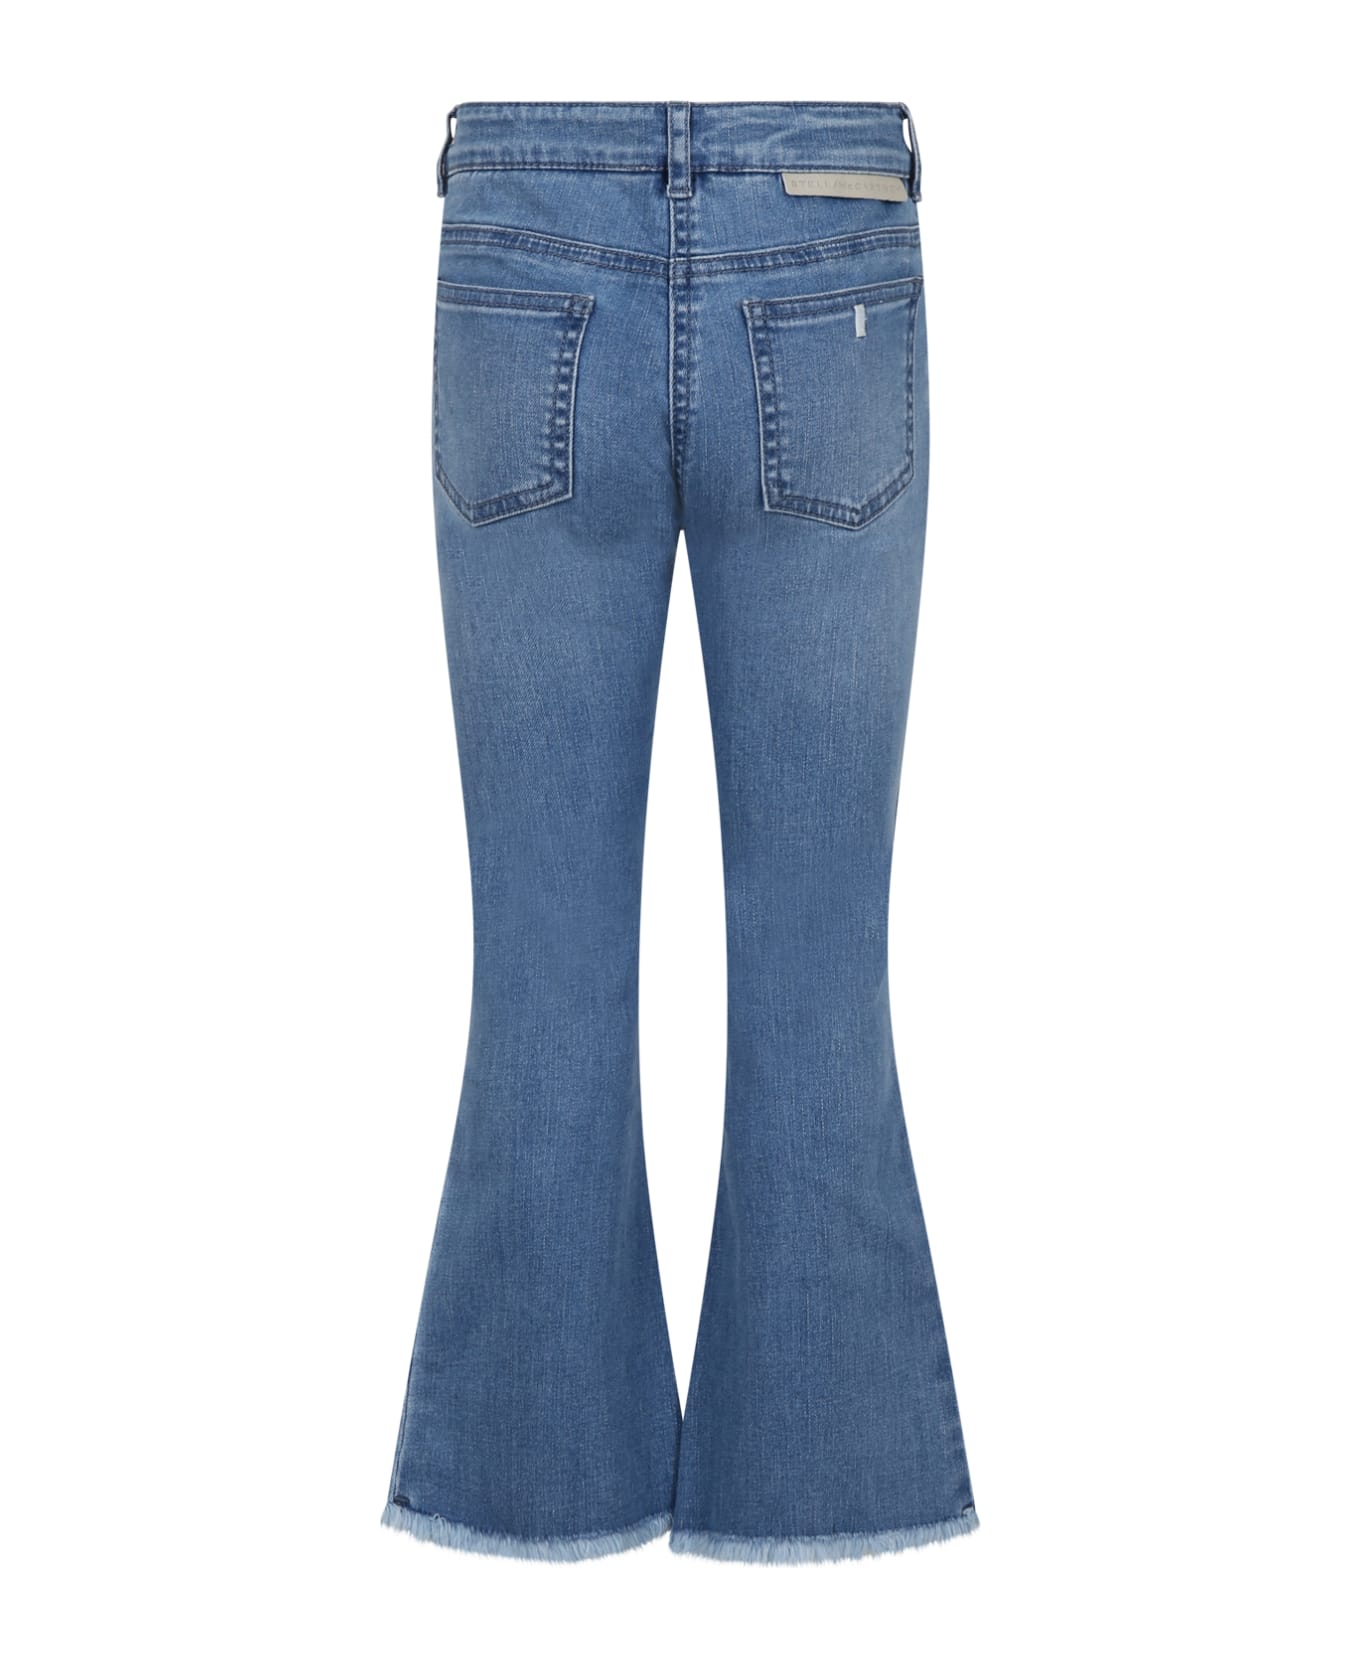 Stella McCartney Kids Denim Flare Jeans For Girl With Fringes - Denim